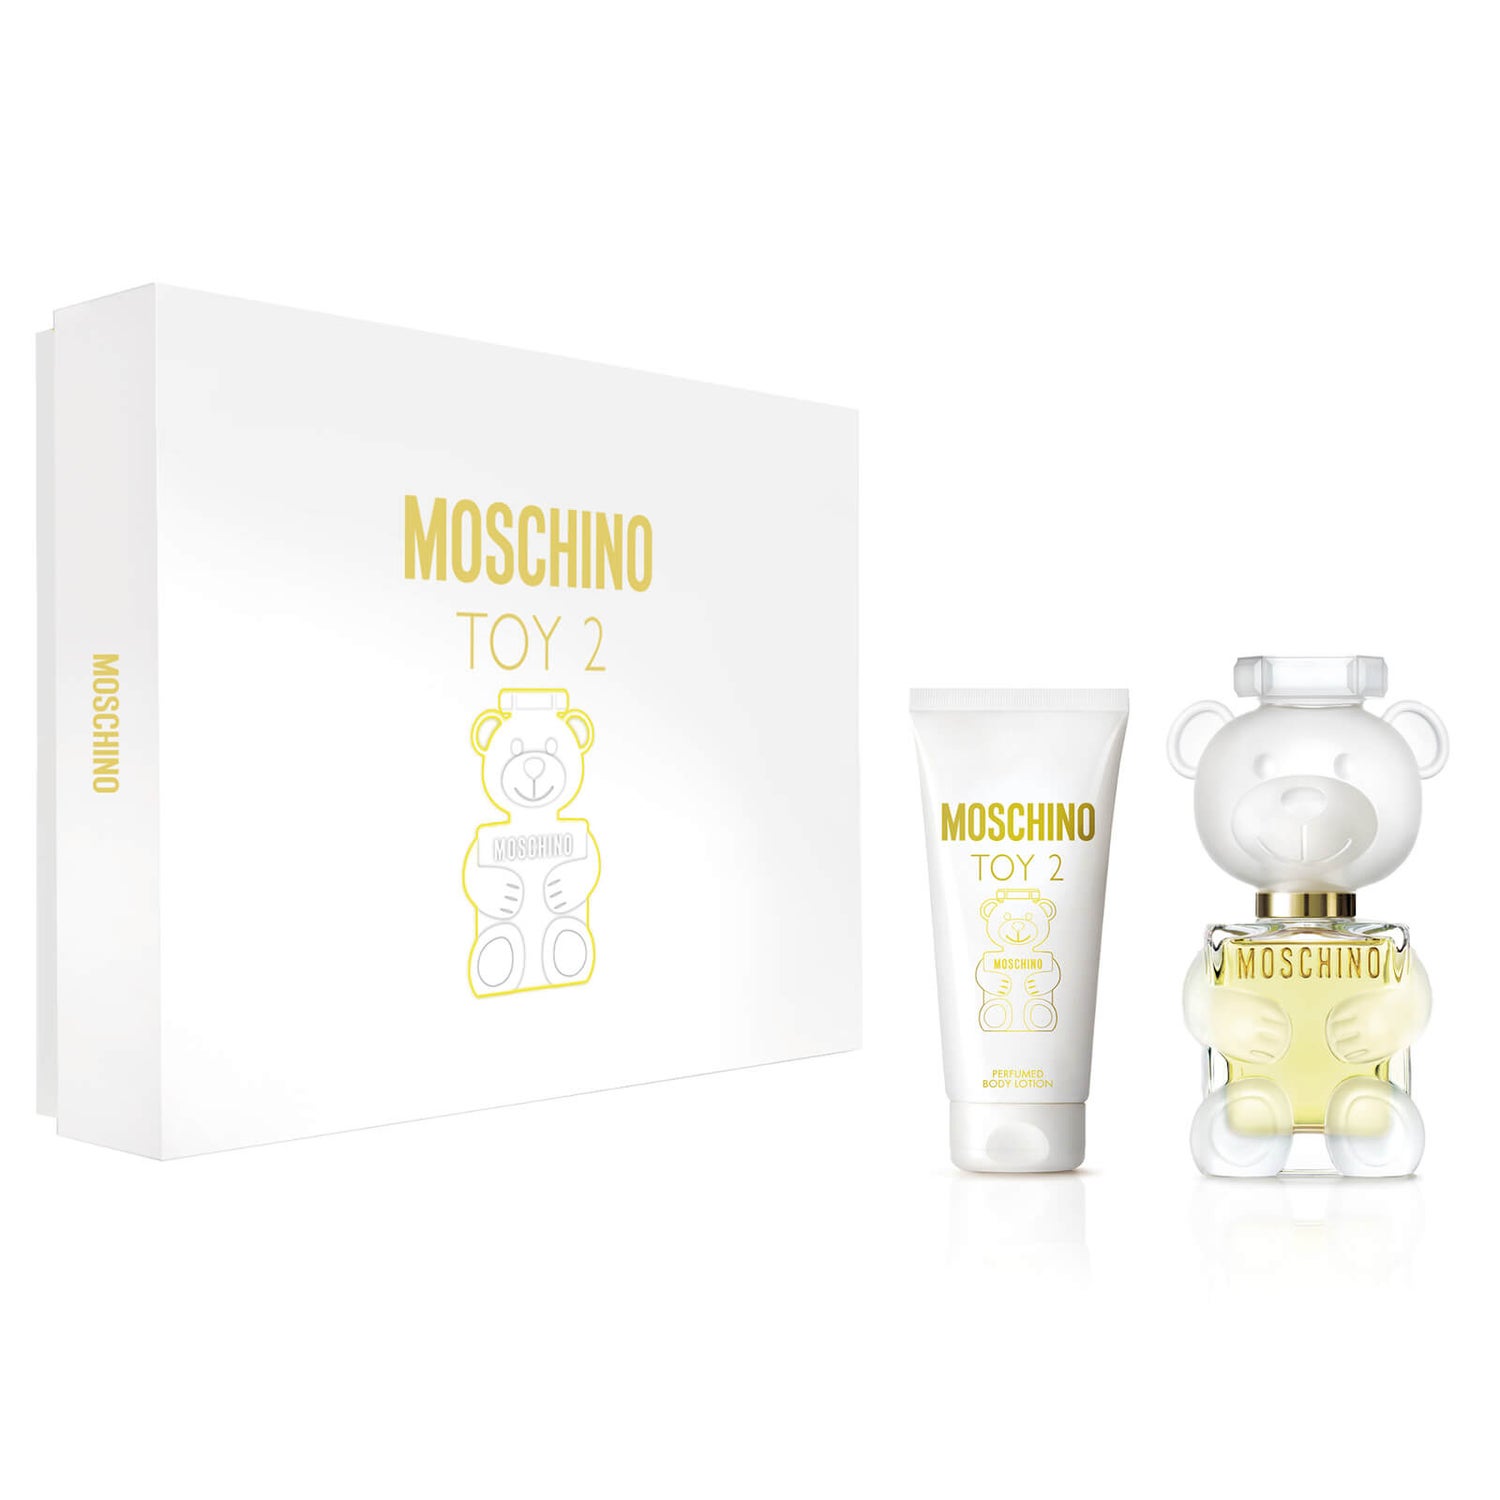 Moschino Perfume Toy 2. Moschino Toy 2 30 ml. Moschino Toy 2 EDP Spray 50ml. Moschino Toy 2 (женские) 50ml парфюмерная вода.